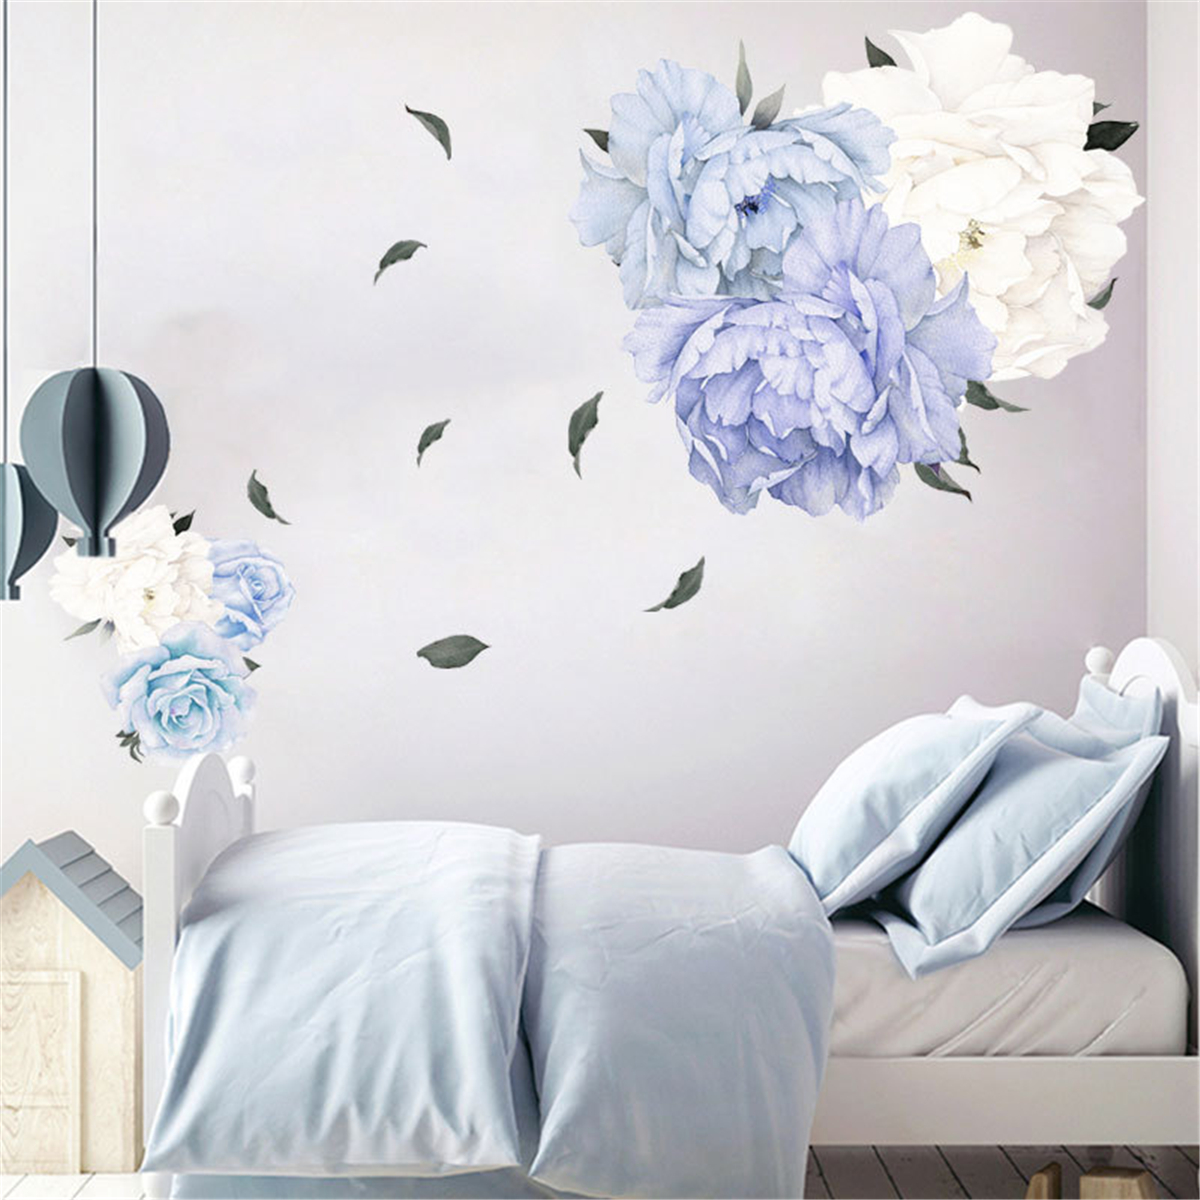 

Peony Flower Blossom Wall Sticker Art Nursery Living Bedroom Home Decor Decal Wall Decorations